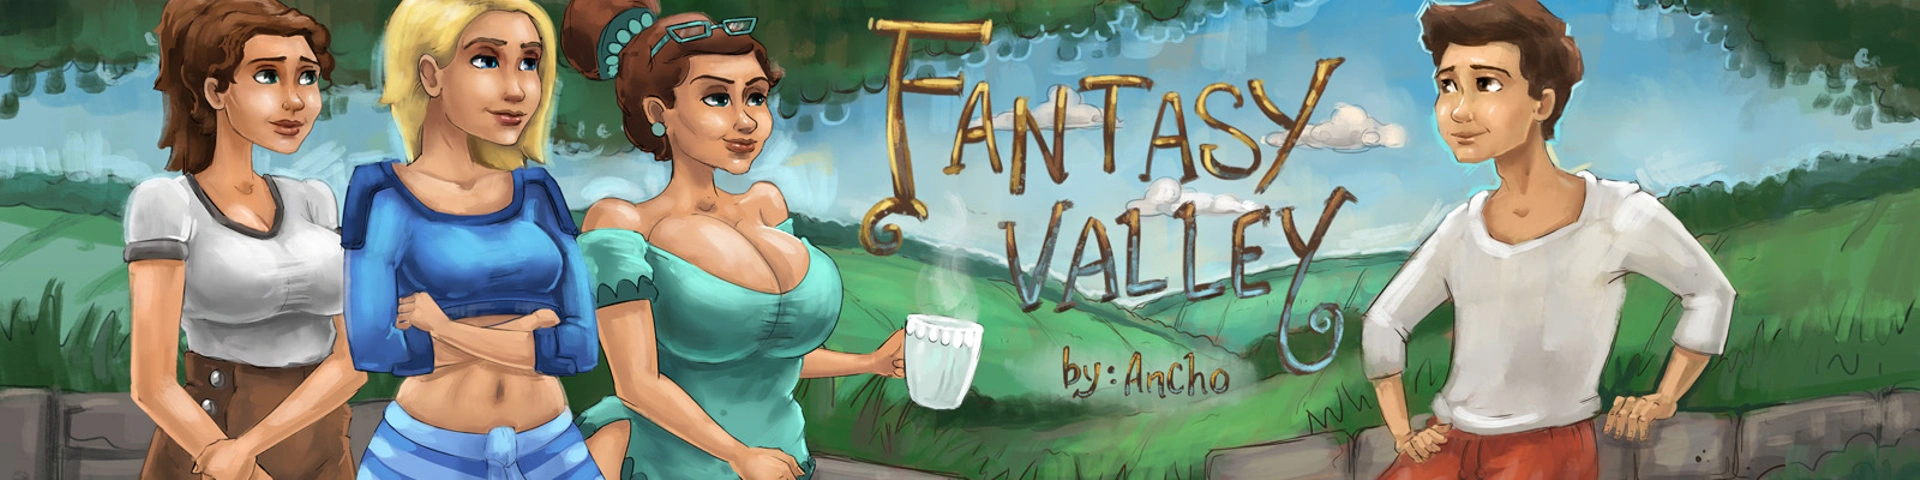 Fantasy Valley main image